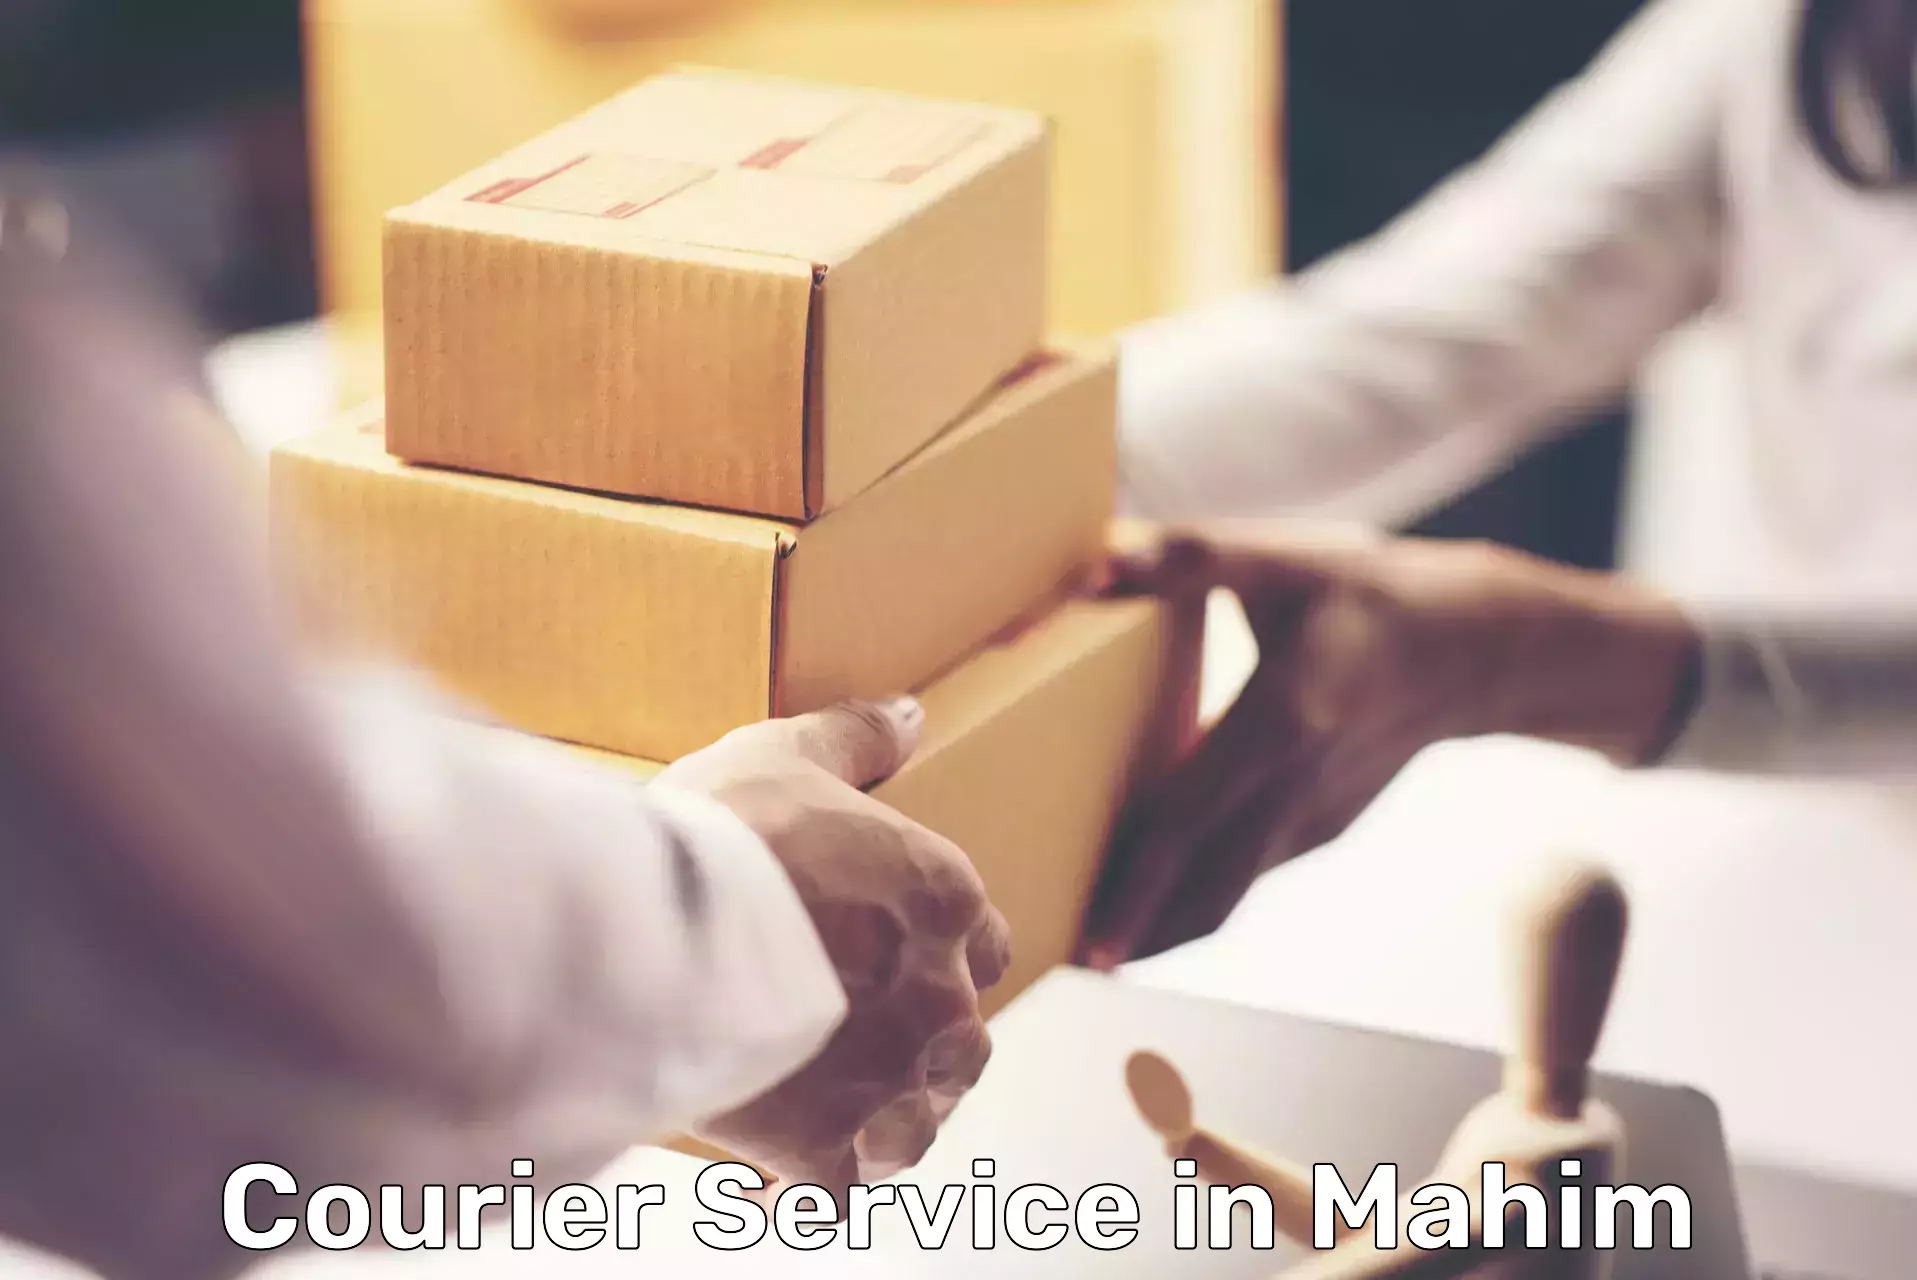 Express package handling in Mahim